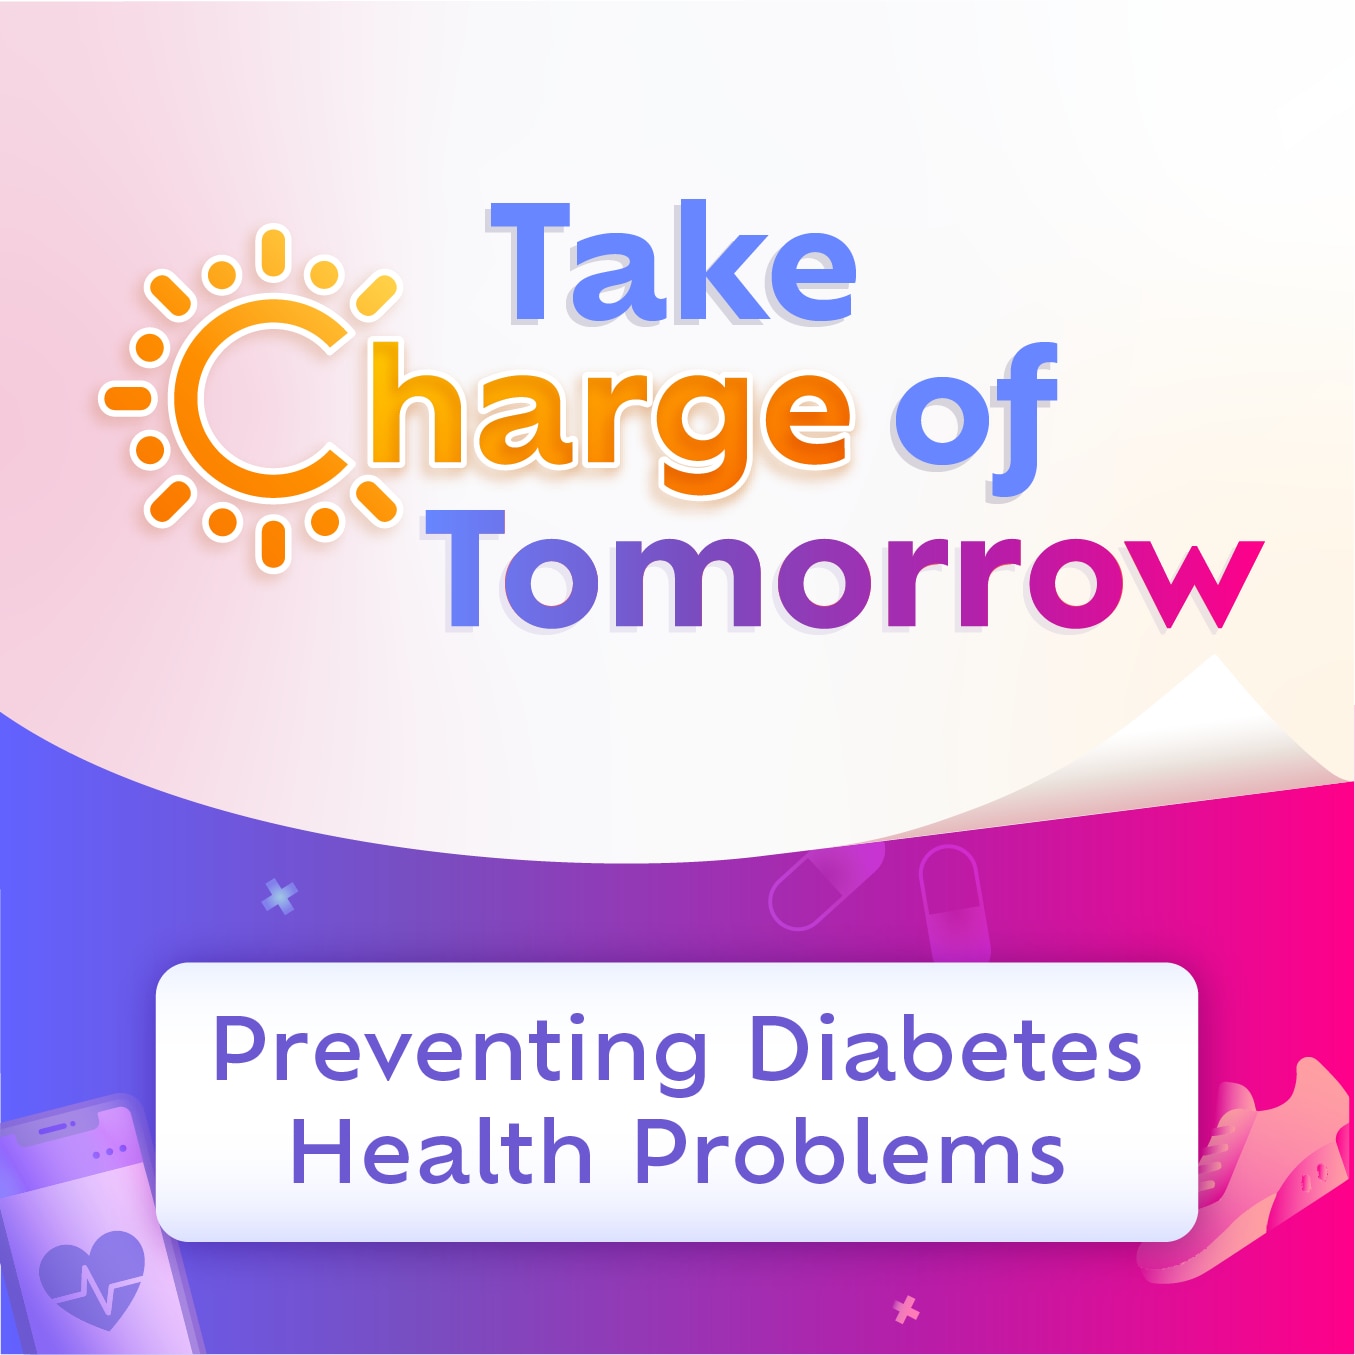 Preventing diabetes through community outreach